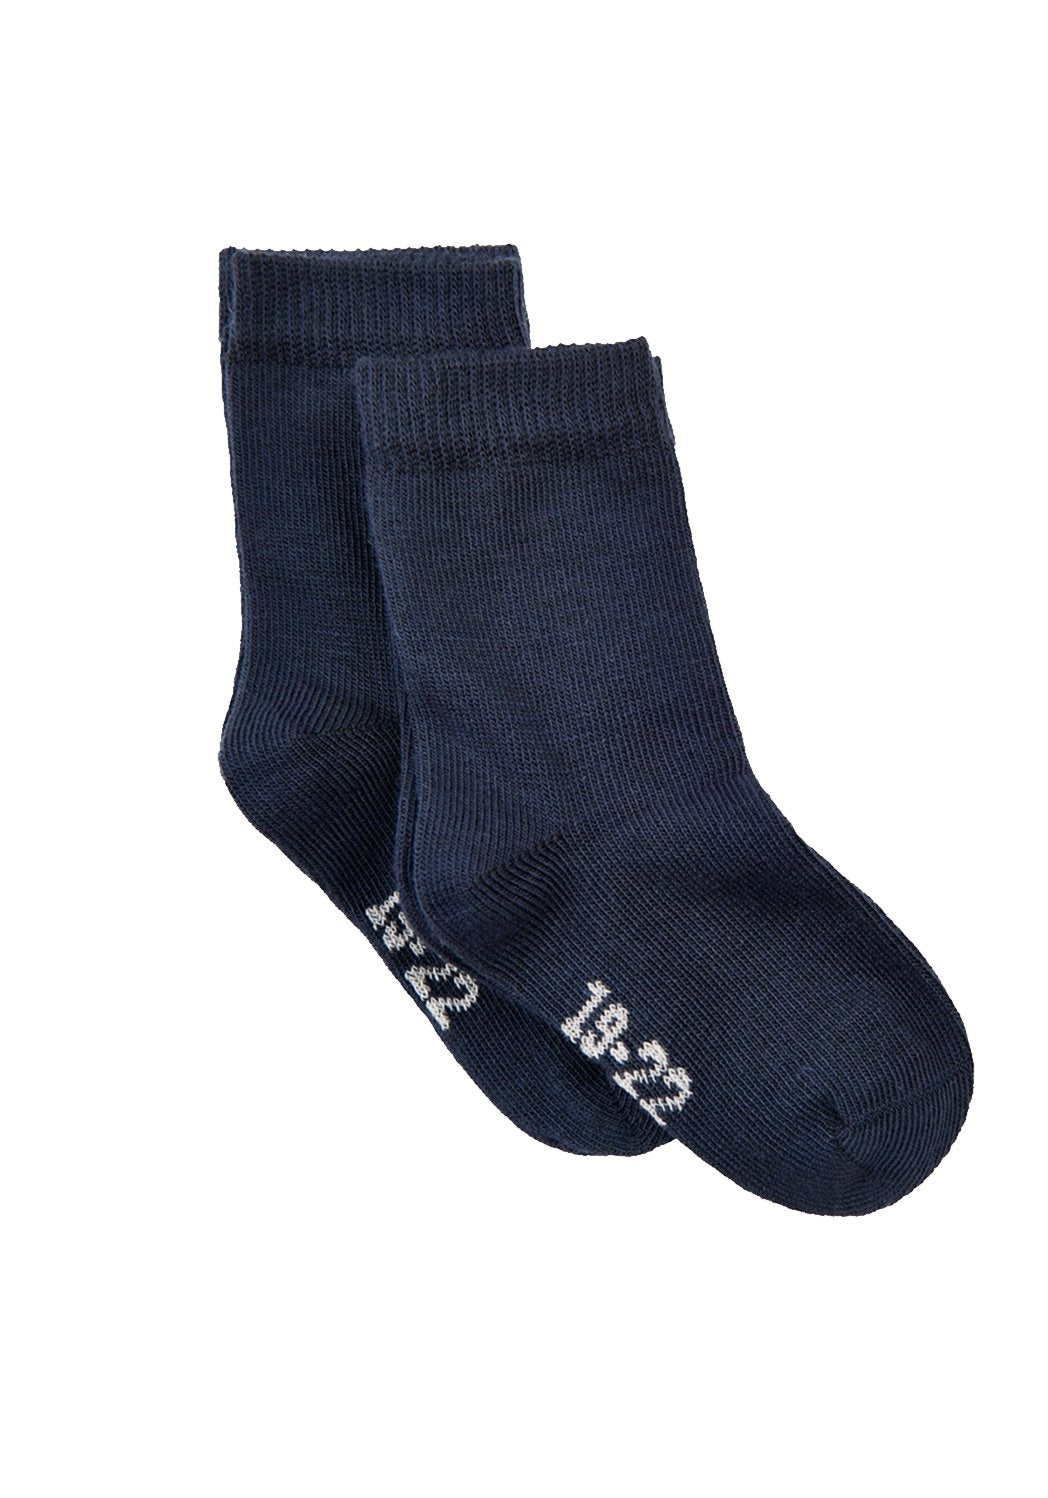 Ankle sock (2-pack), Dark Navy - Koko-Kamel.com